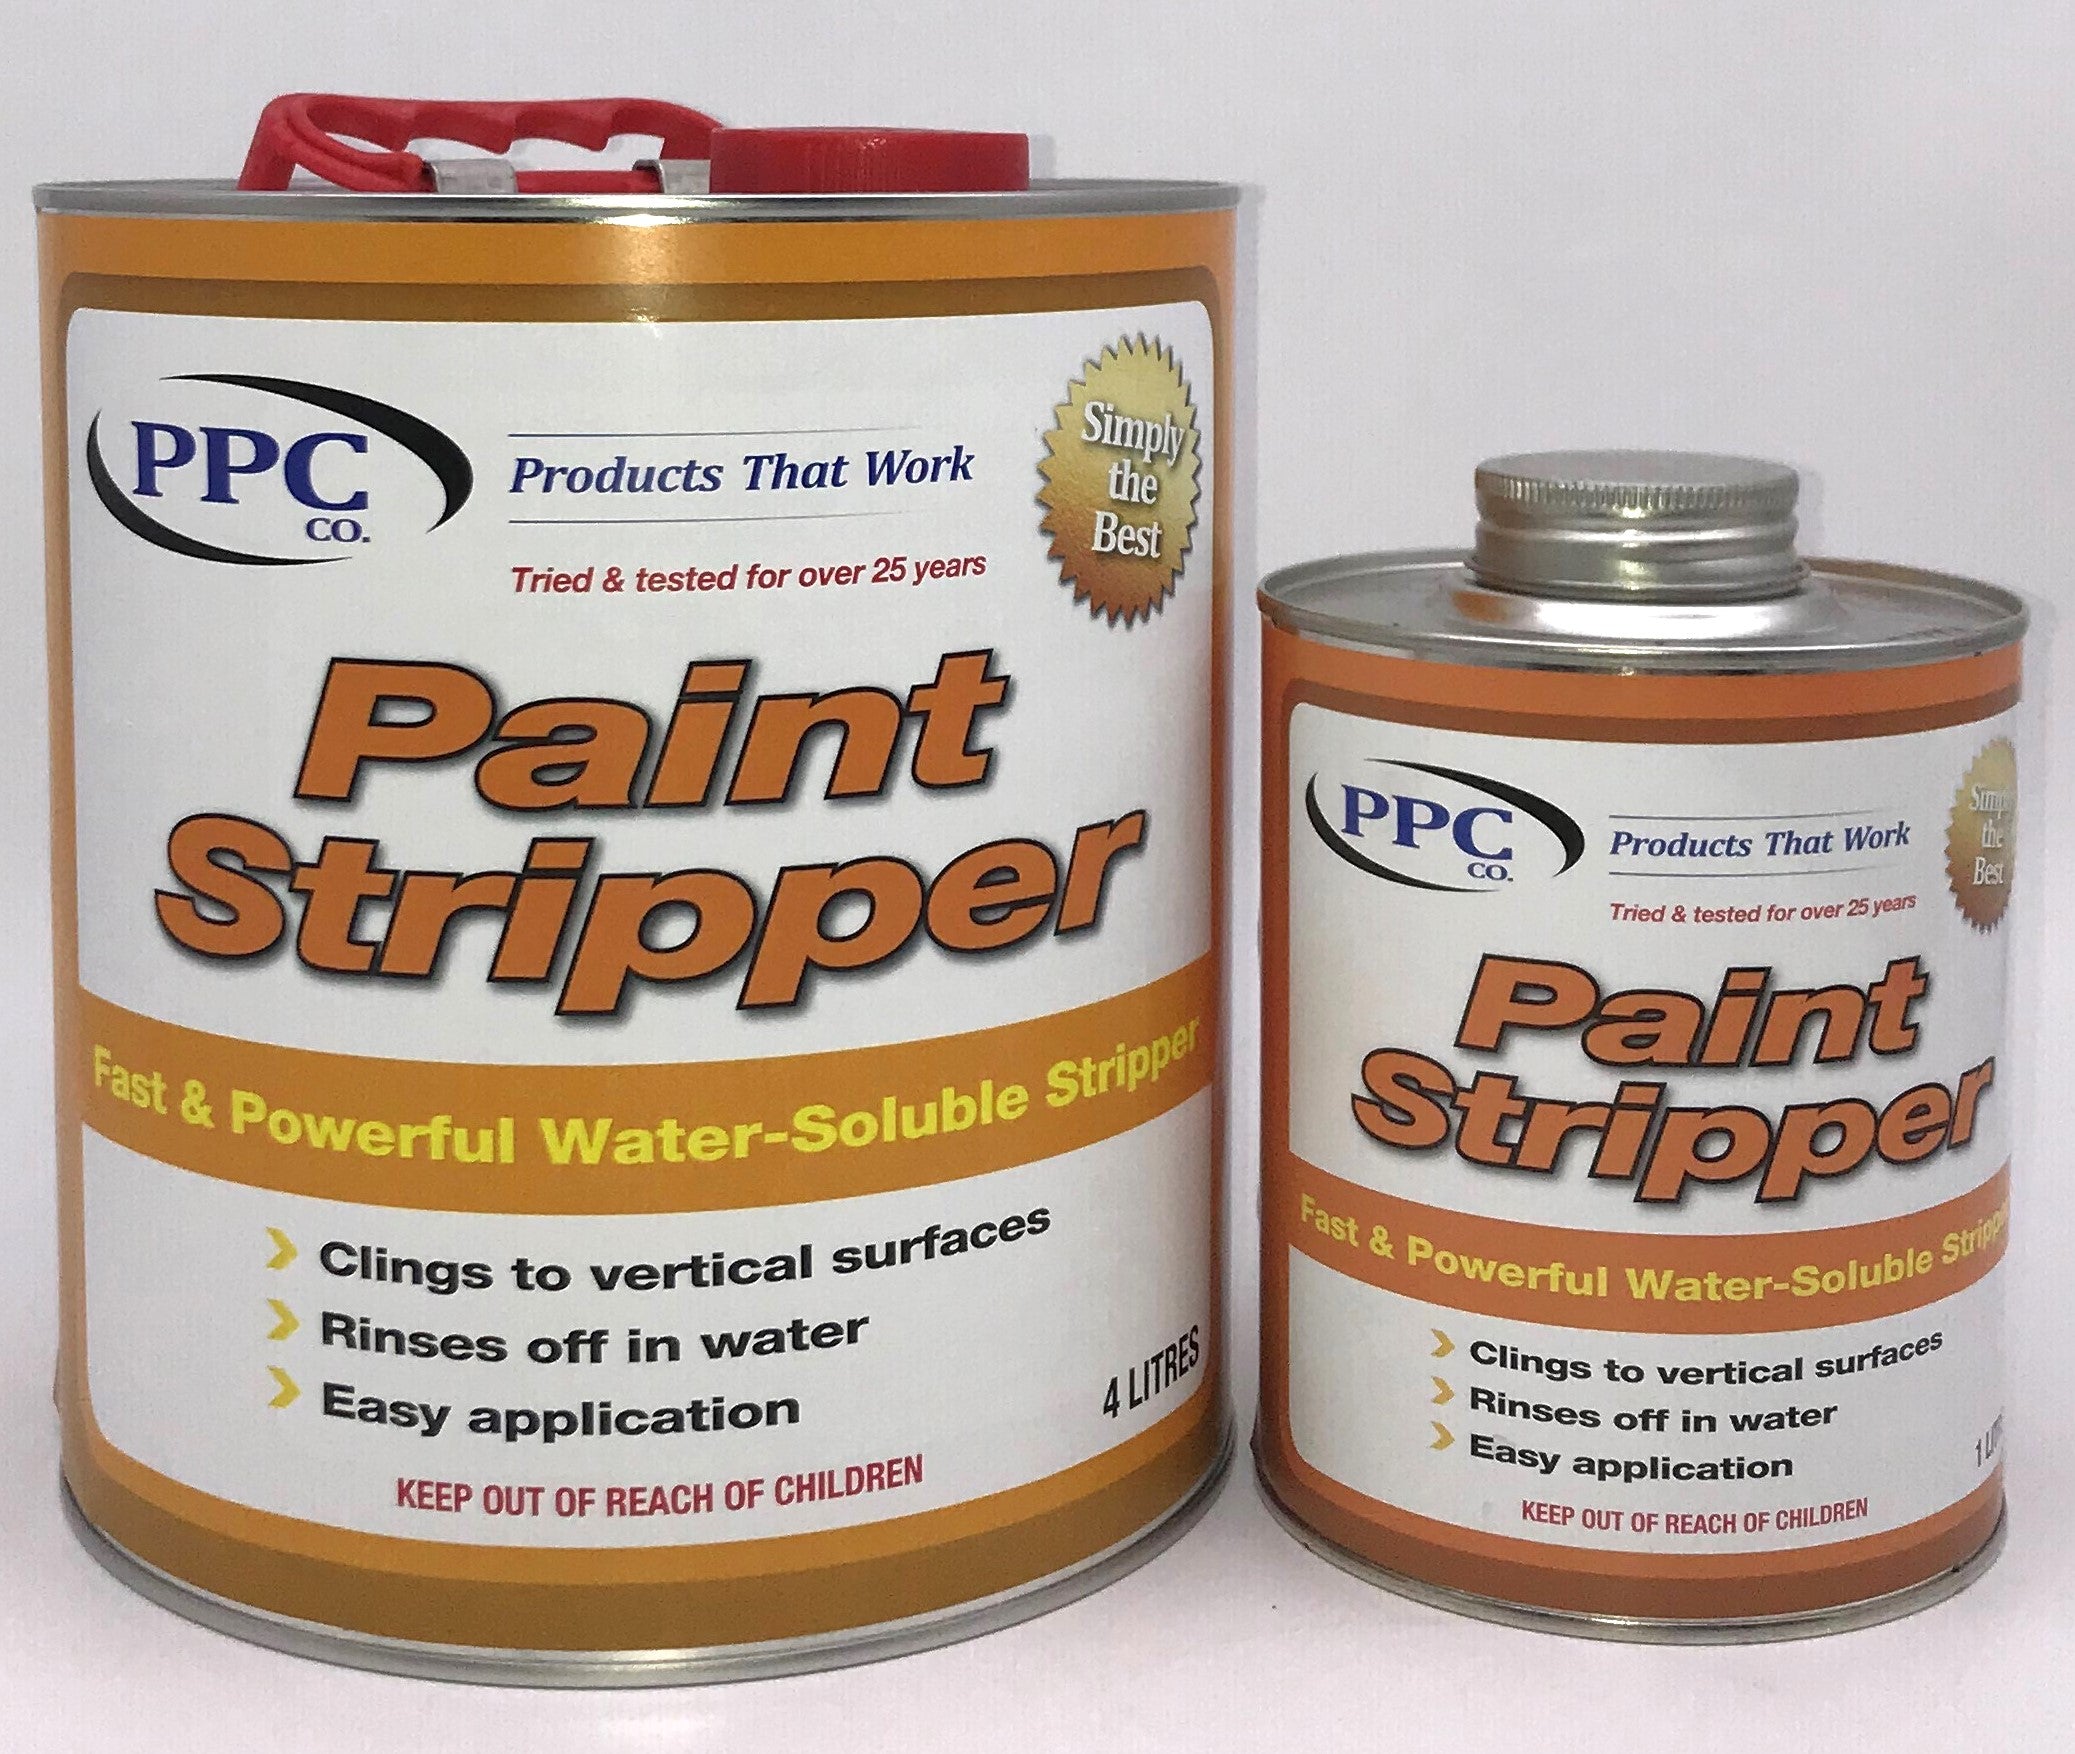 PPC Paint Stripper